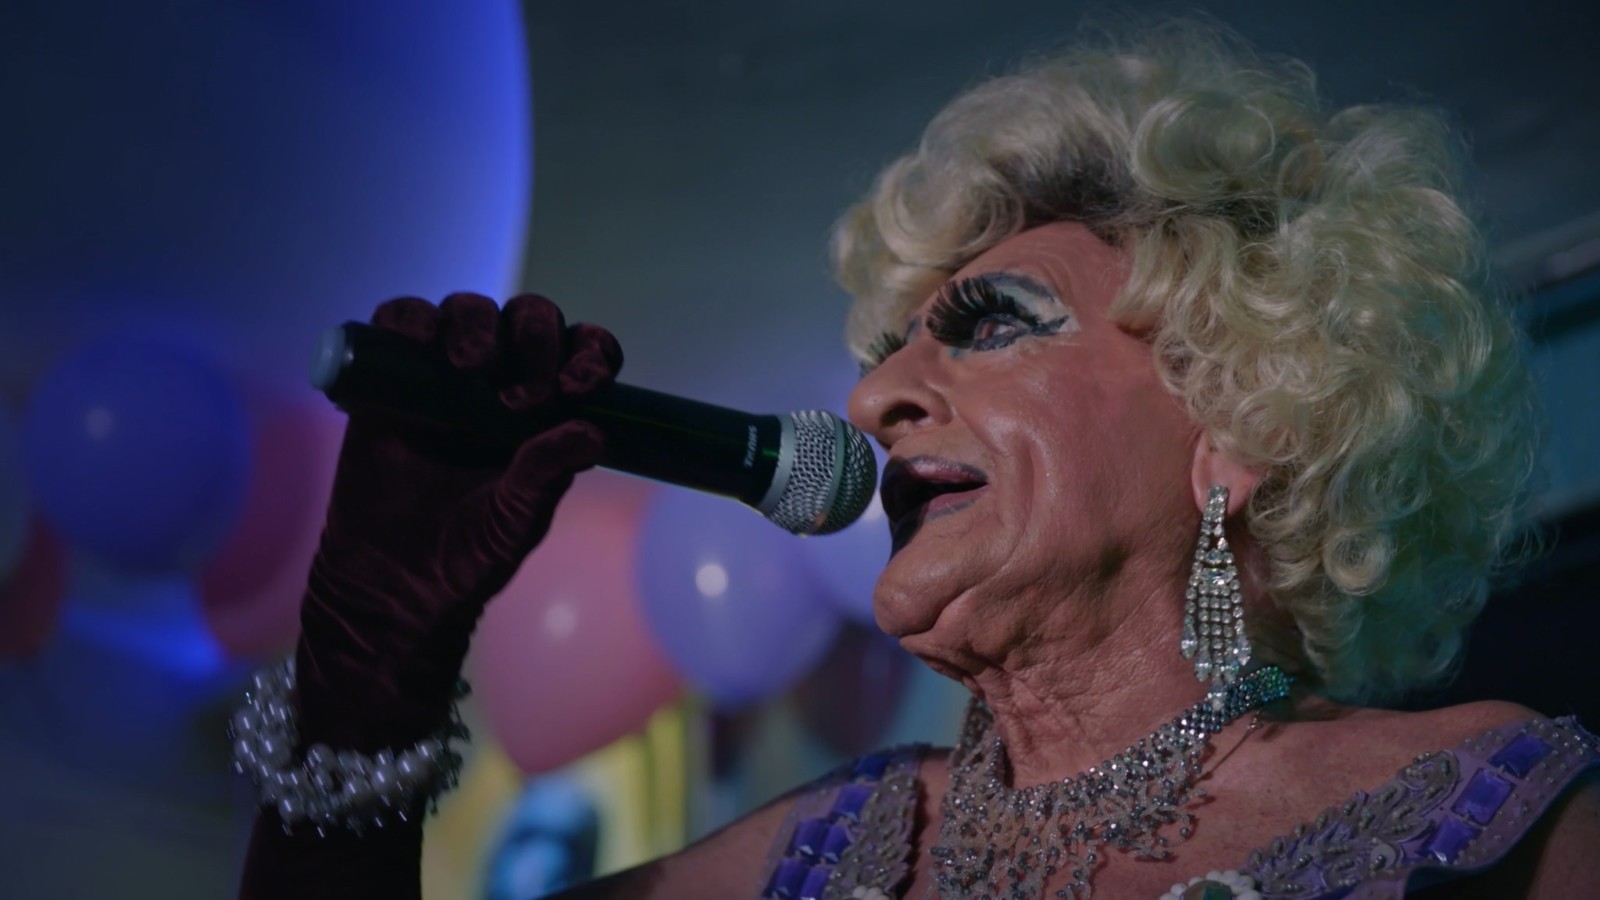 Elderly drag queen singing into microphone looking emotional